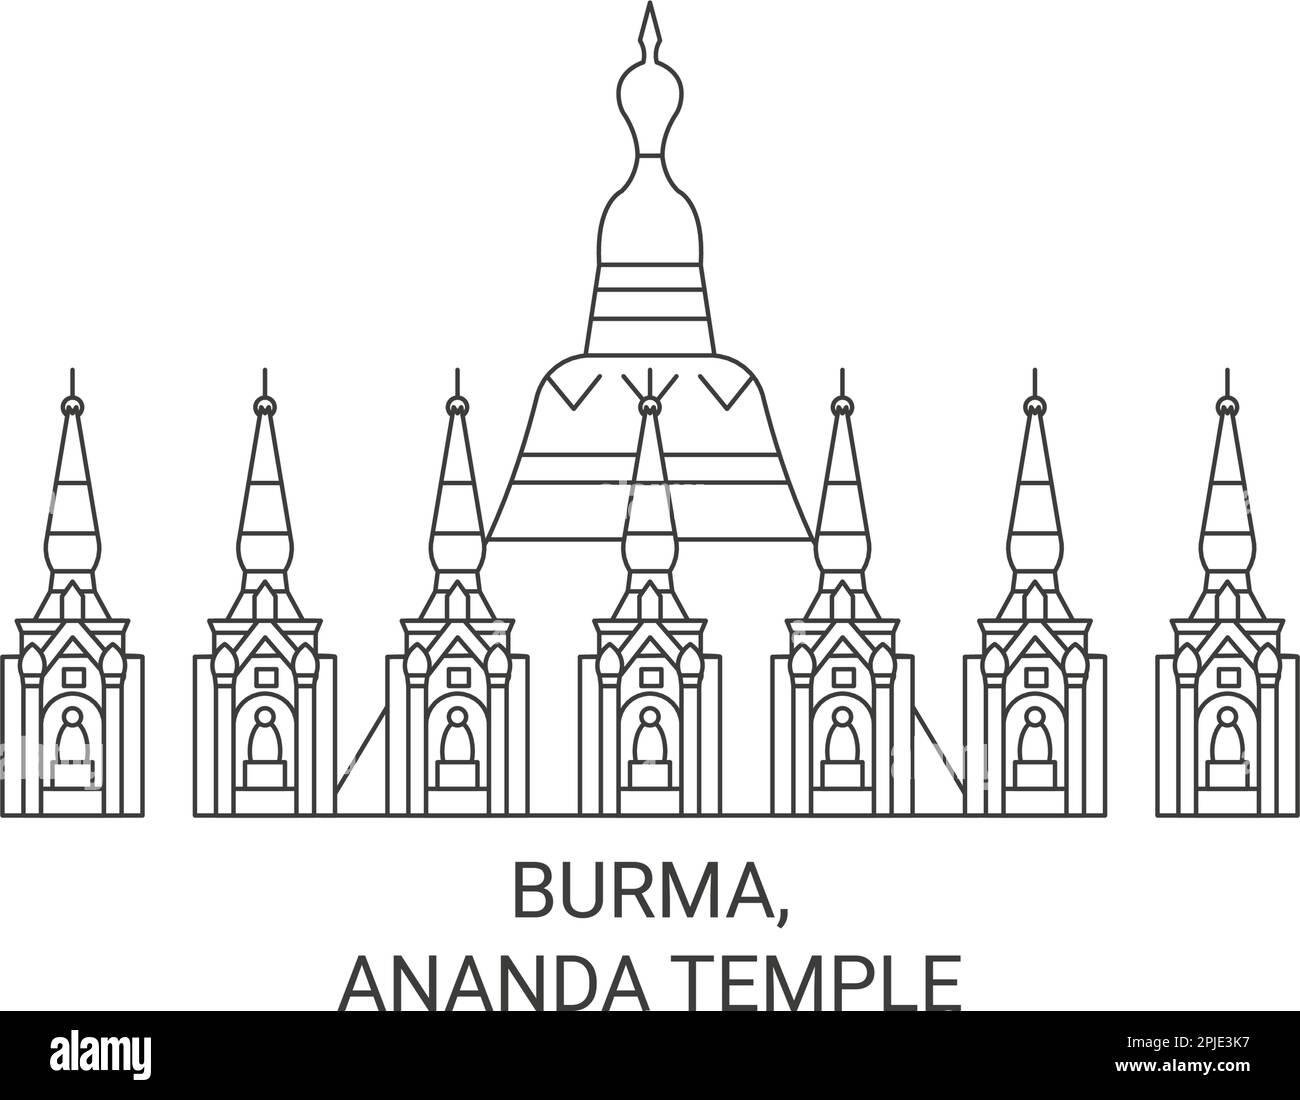 Burma, Ananda Temple travel landmark vector illustration Stock Vector